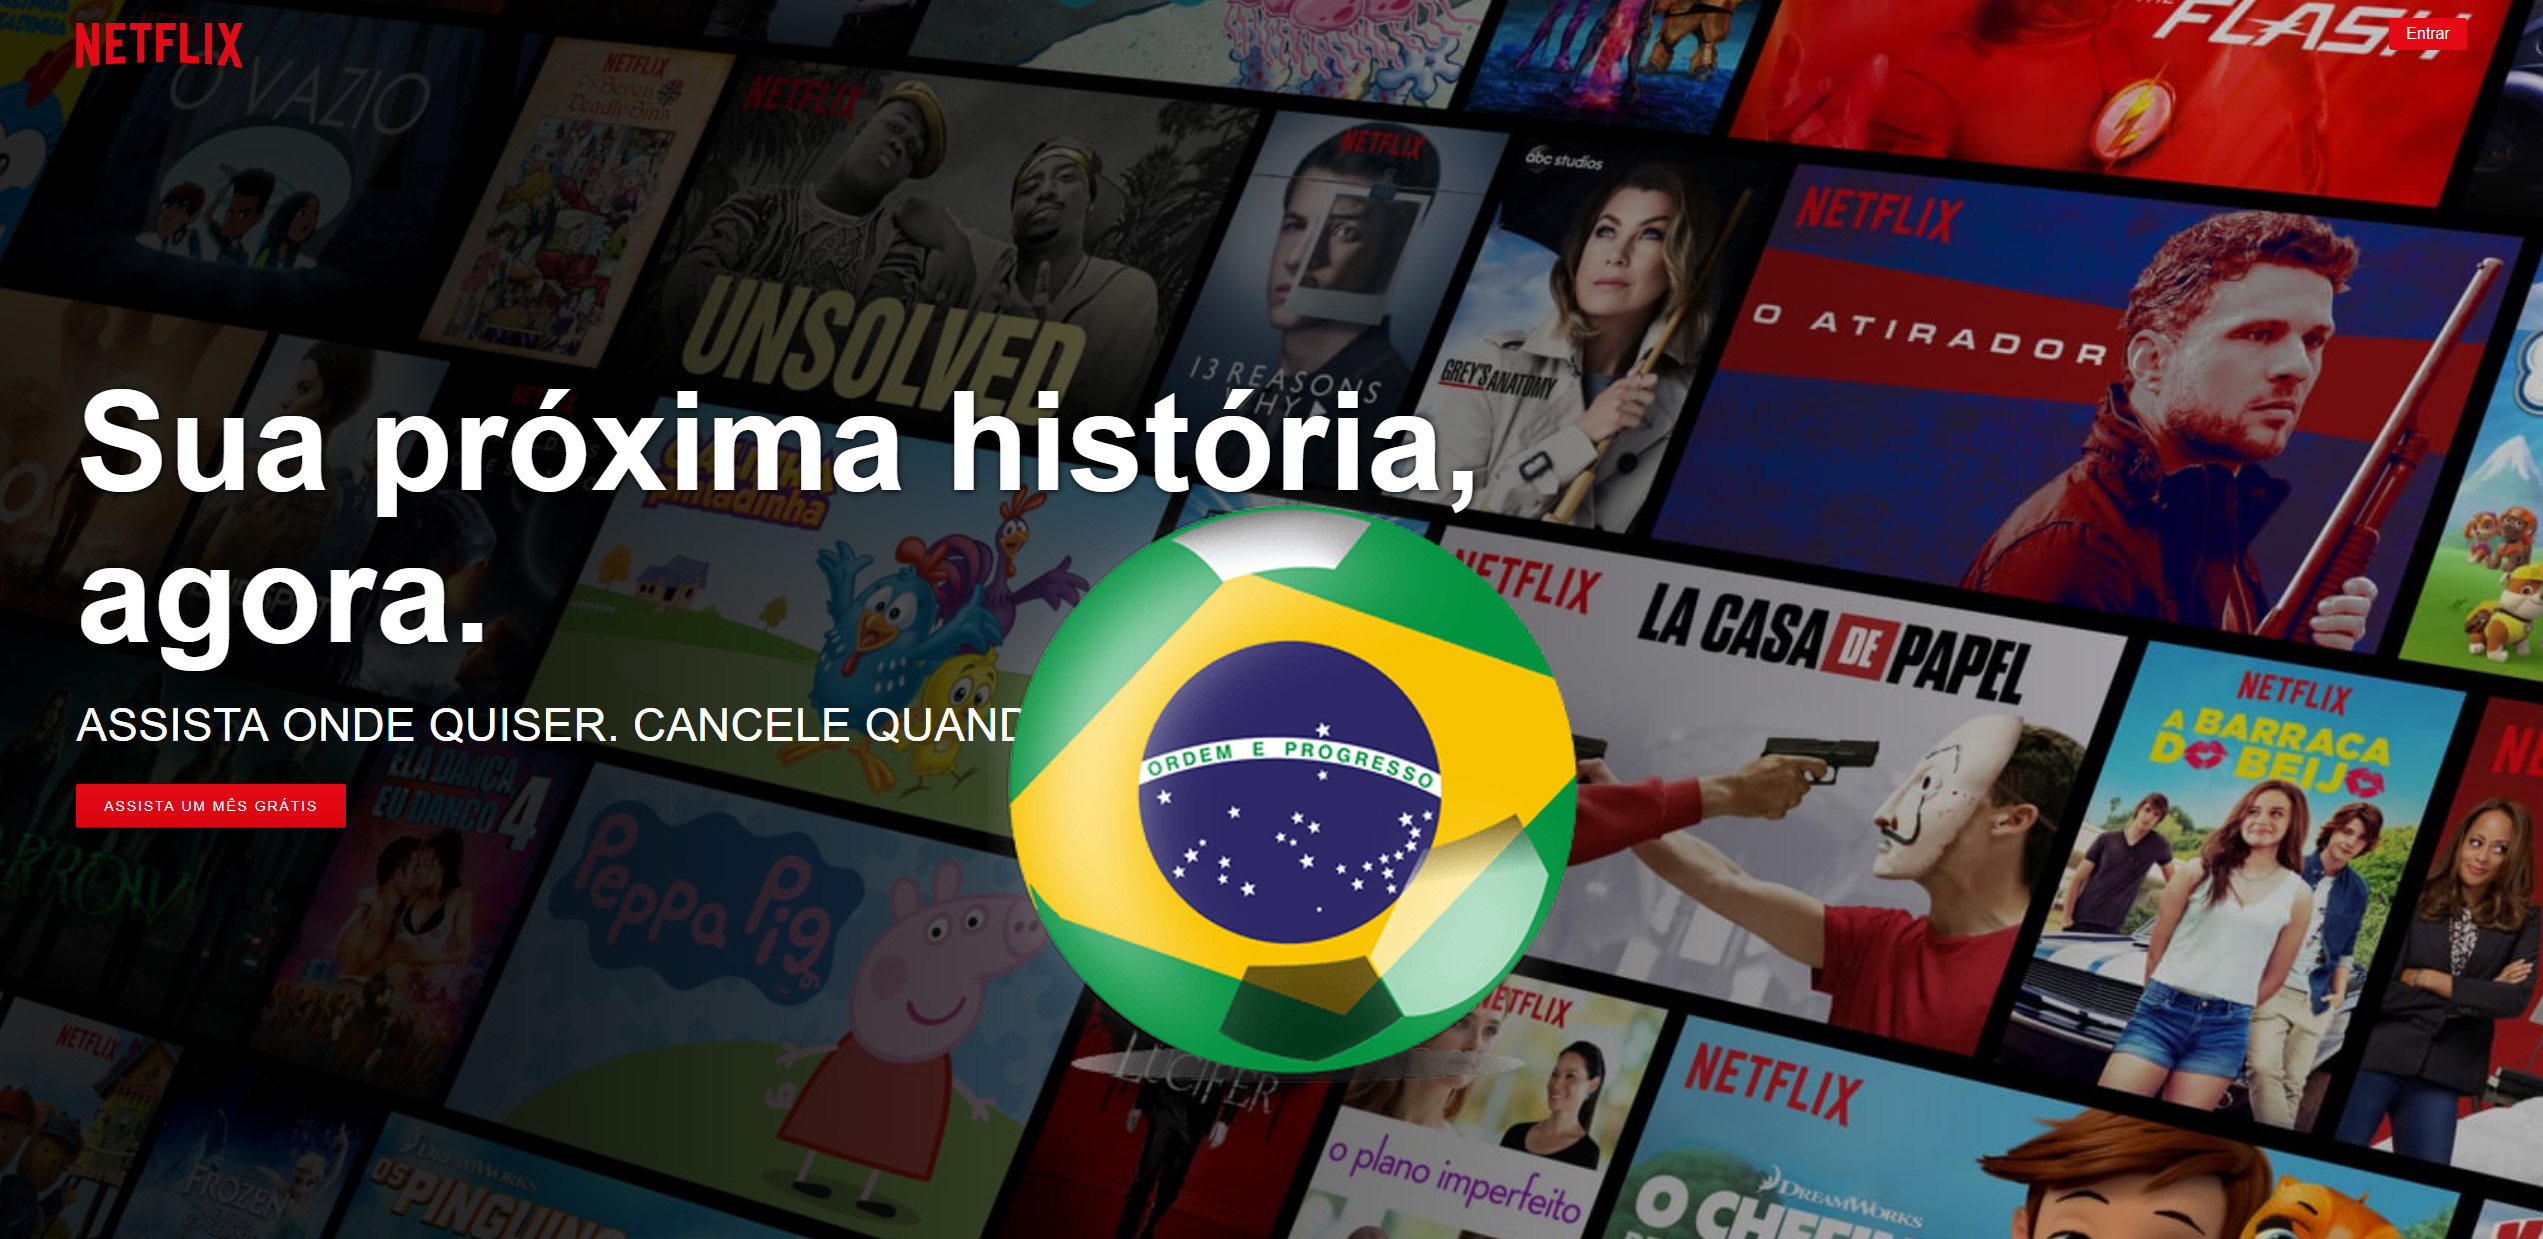 Netflix, Brasil